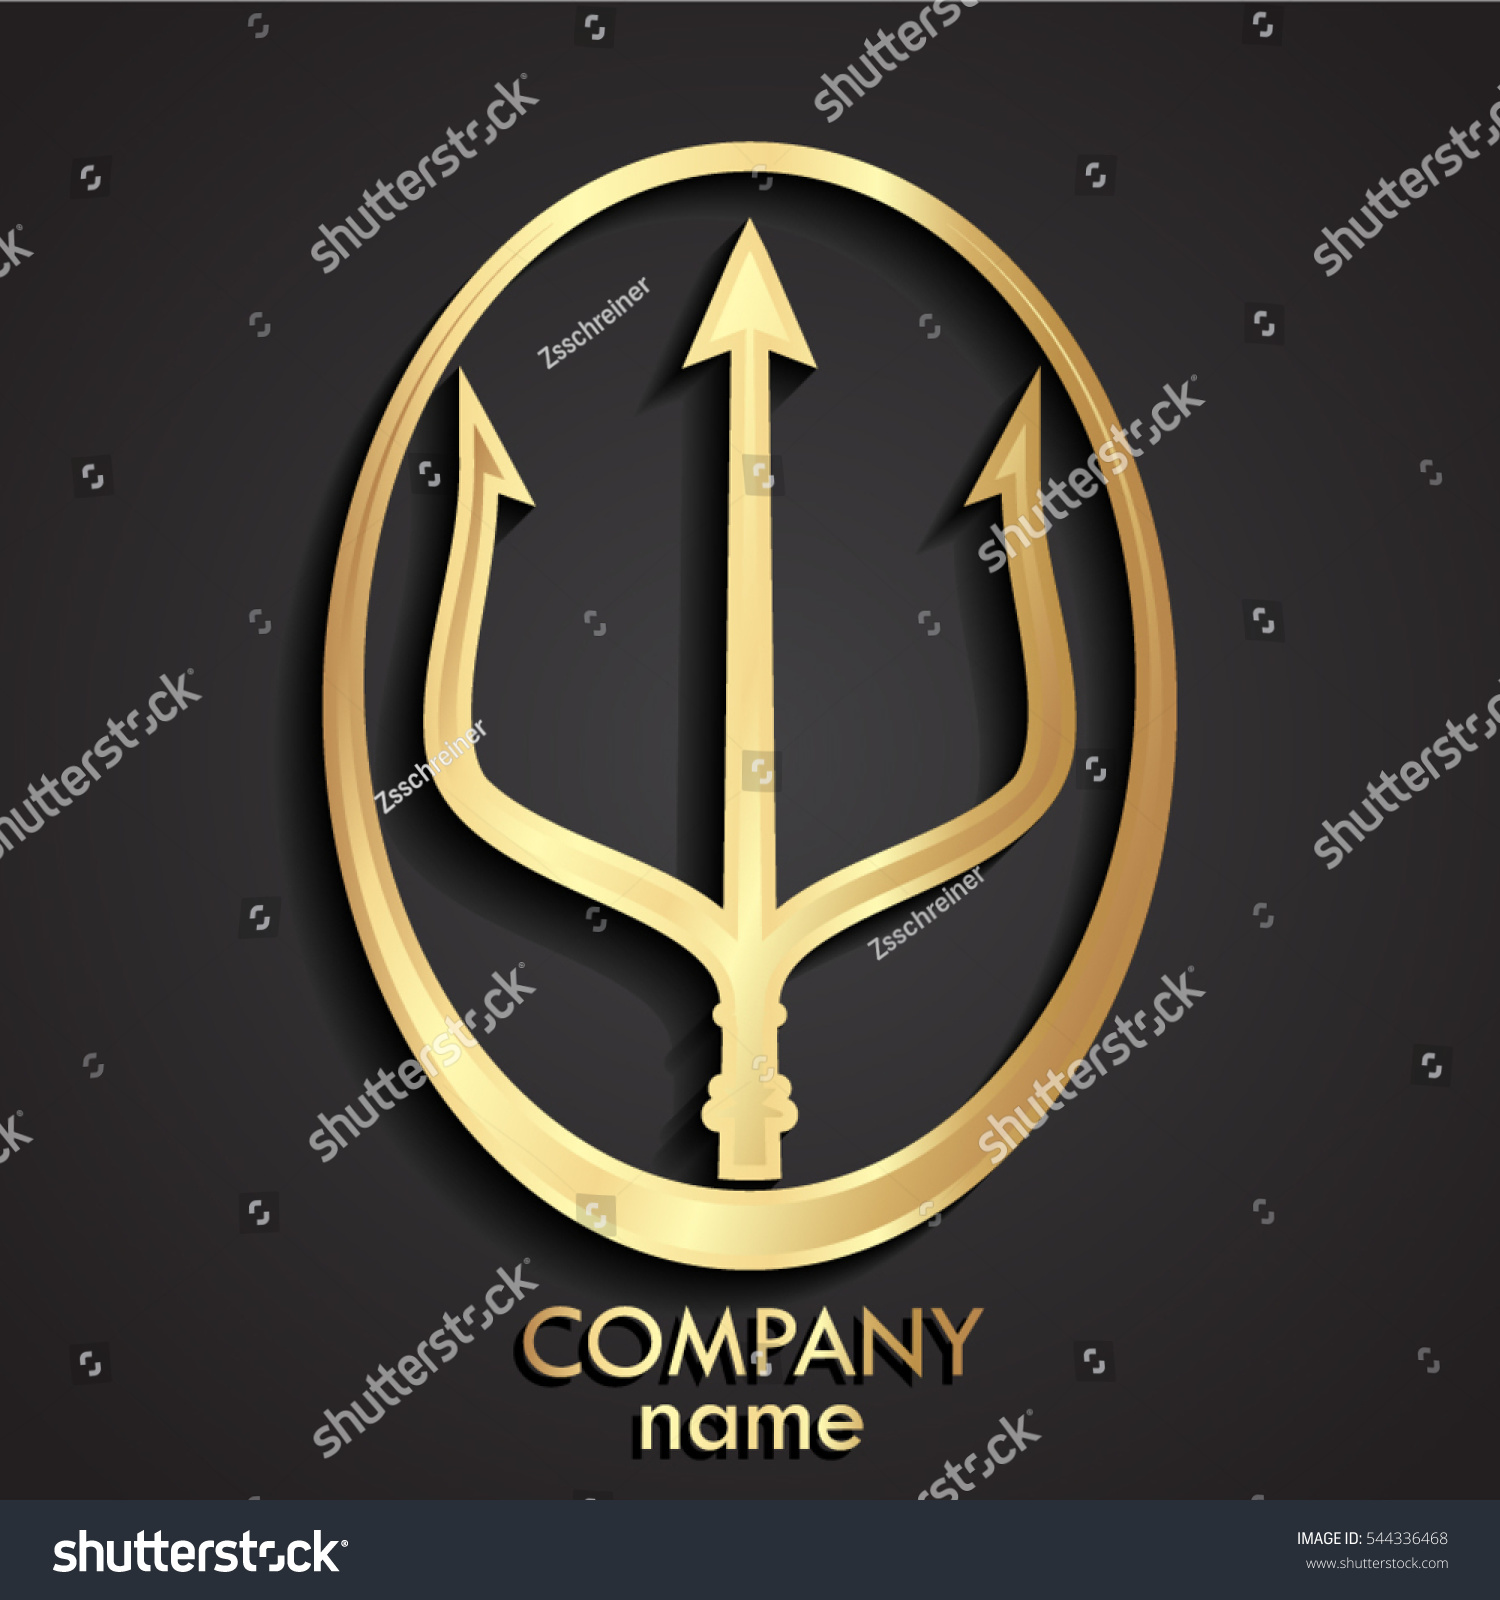 3d Golden Trident Logo Stock Vector (Royalty Free) 544336468 | Shutterstock